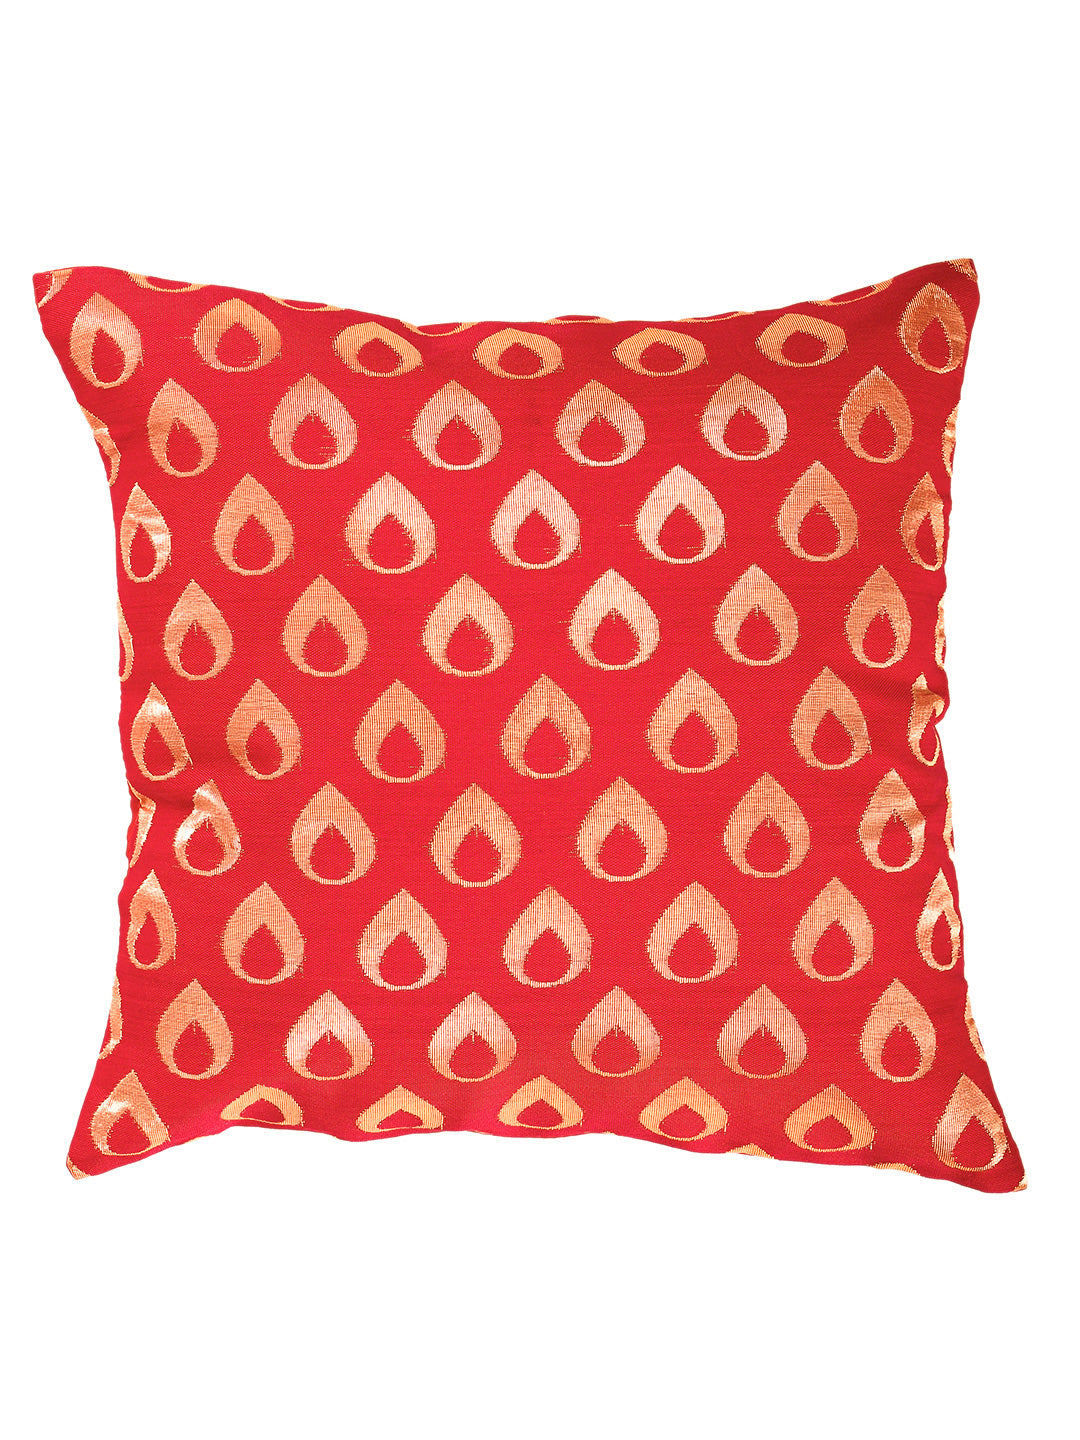 Silkfab Set 0f 5 Decorative Silk Cushion Covers (16x16) Drop Red - SILKFAB